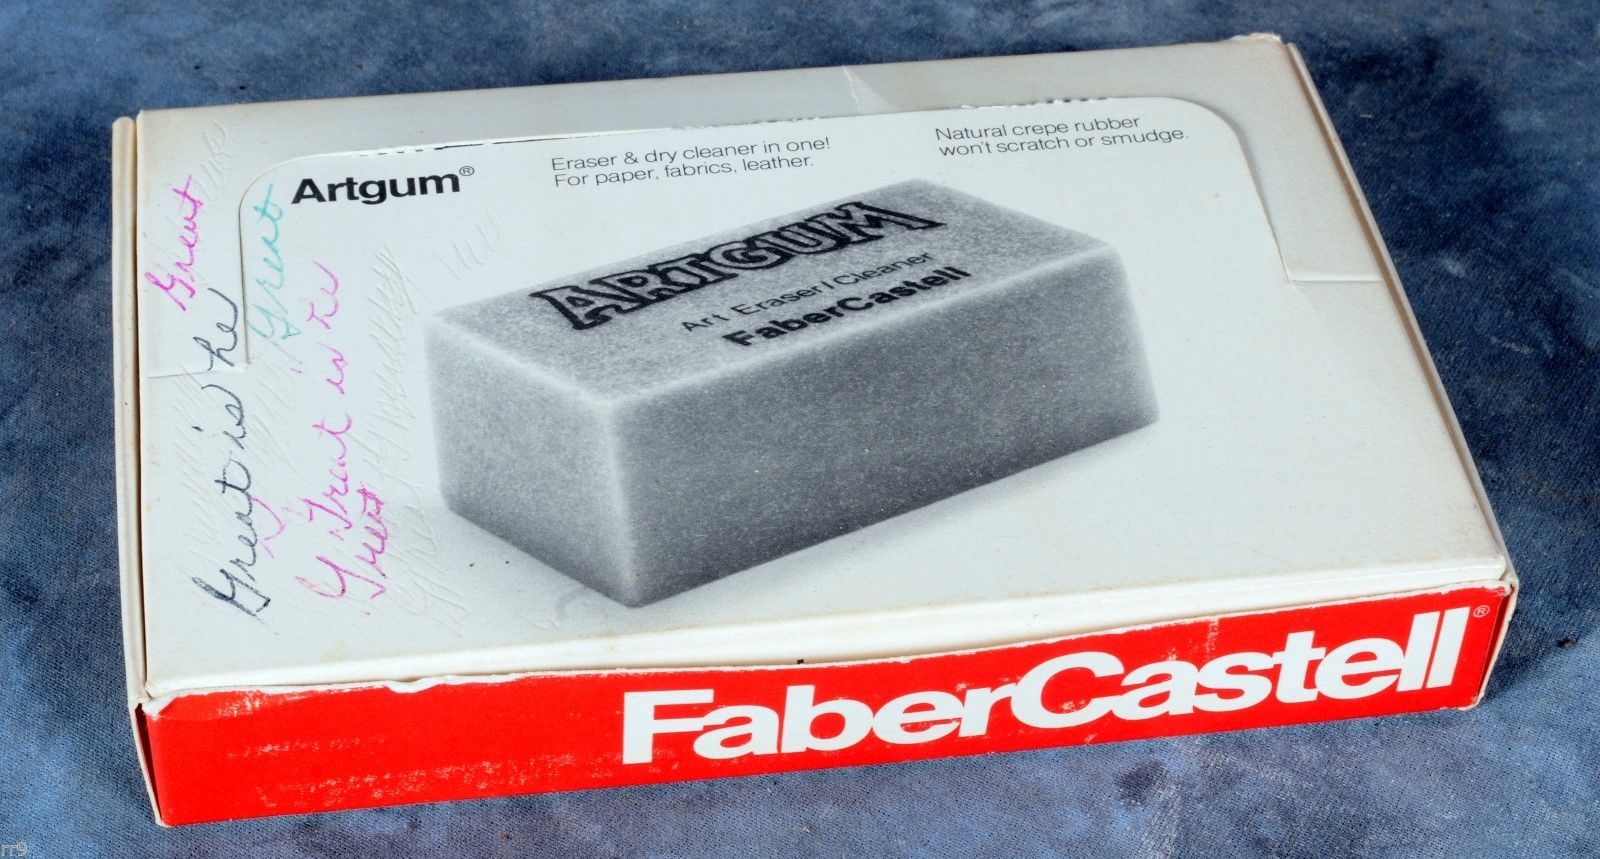 Faber Castell Artgum Eraser in Original Box of 11 - $9.99